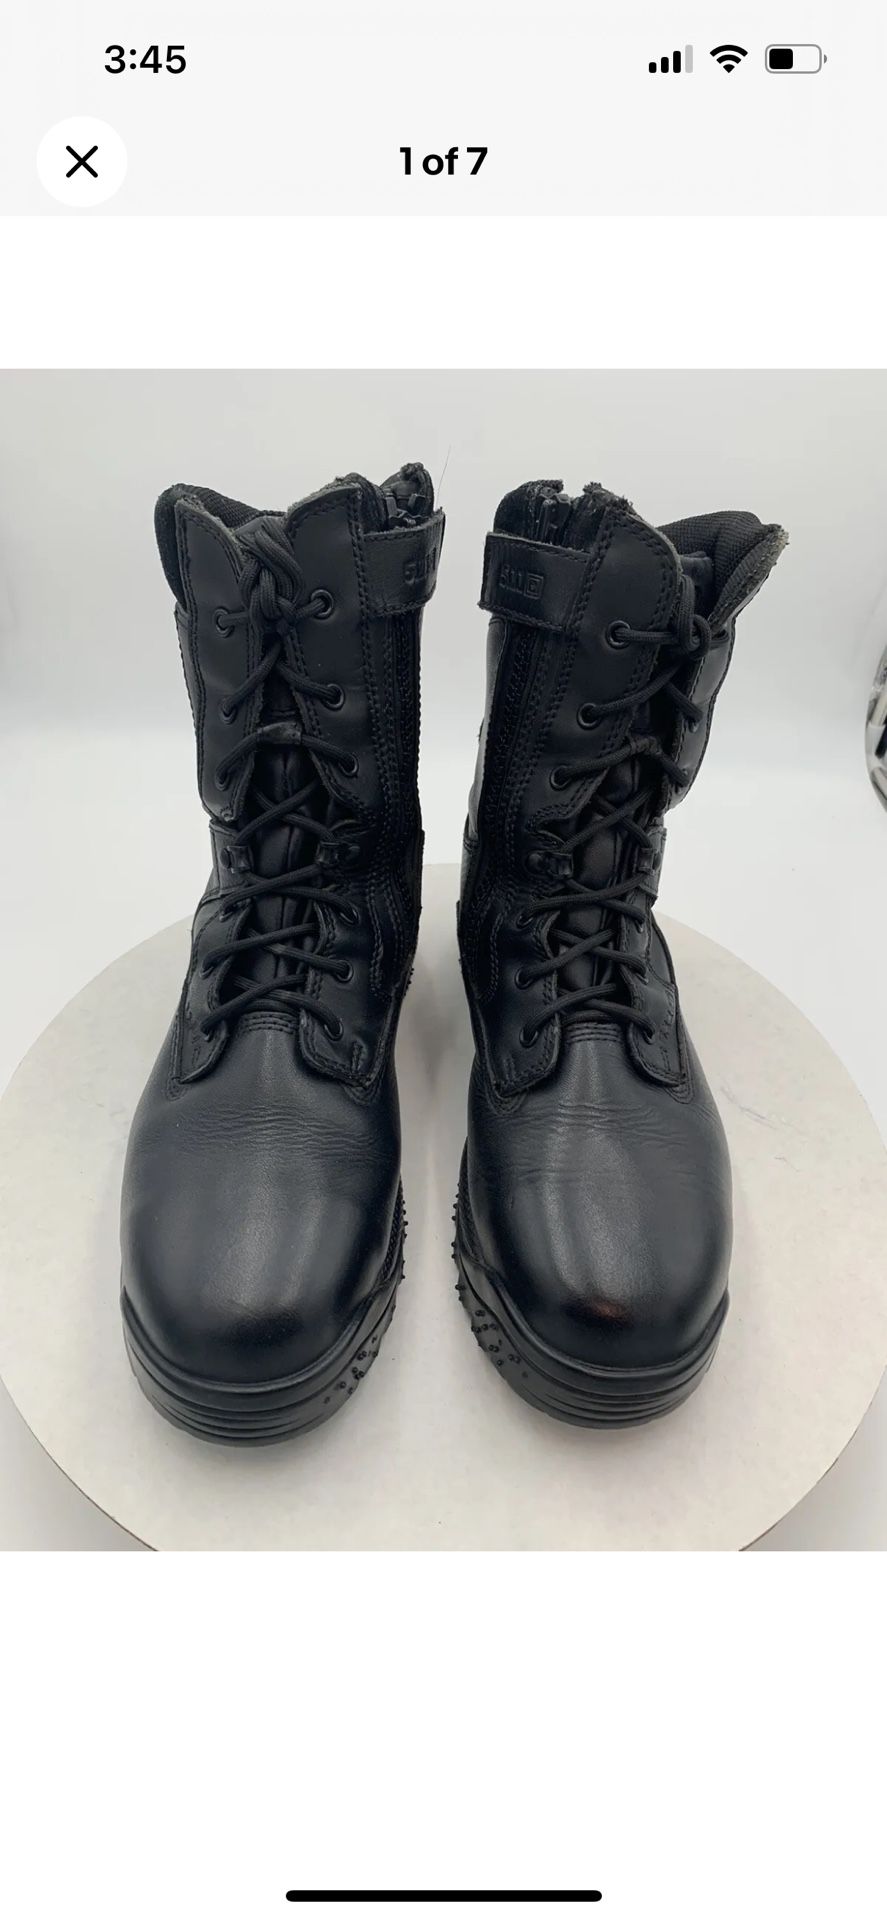 Tactical Series 5.11 Side Zip Boots